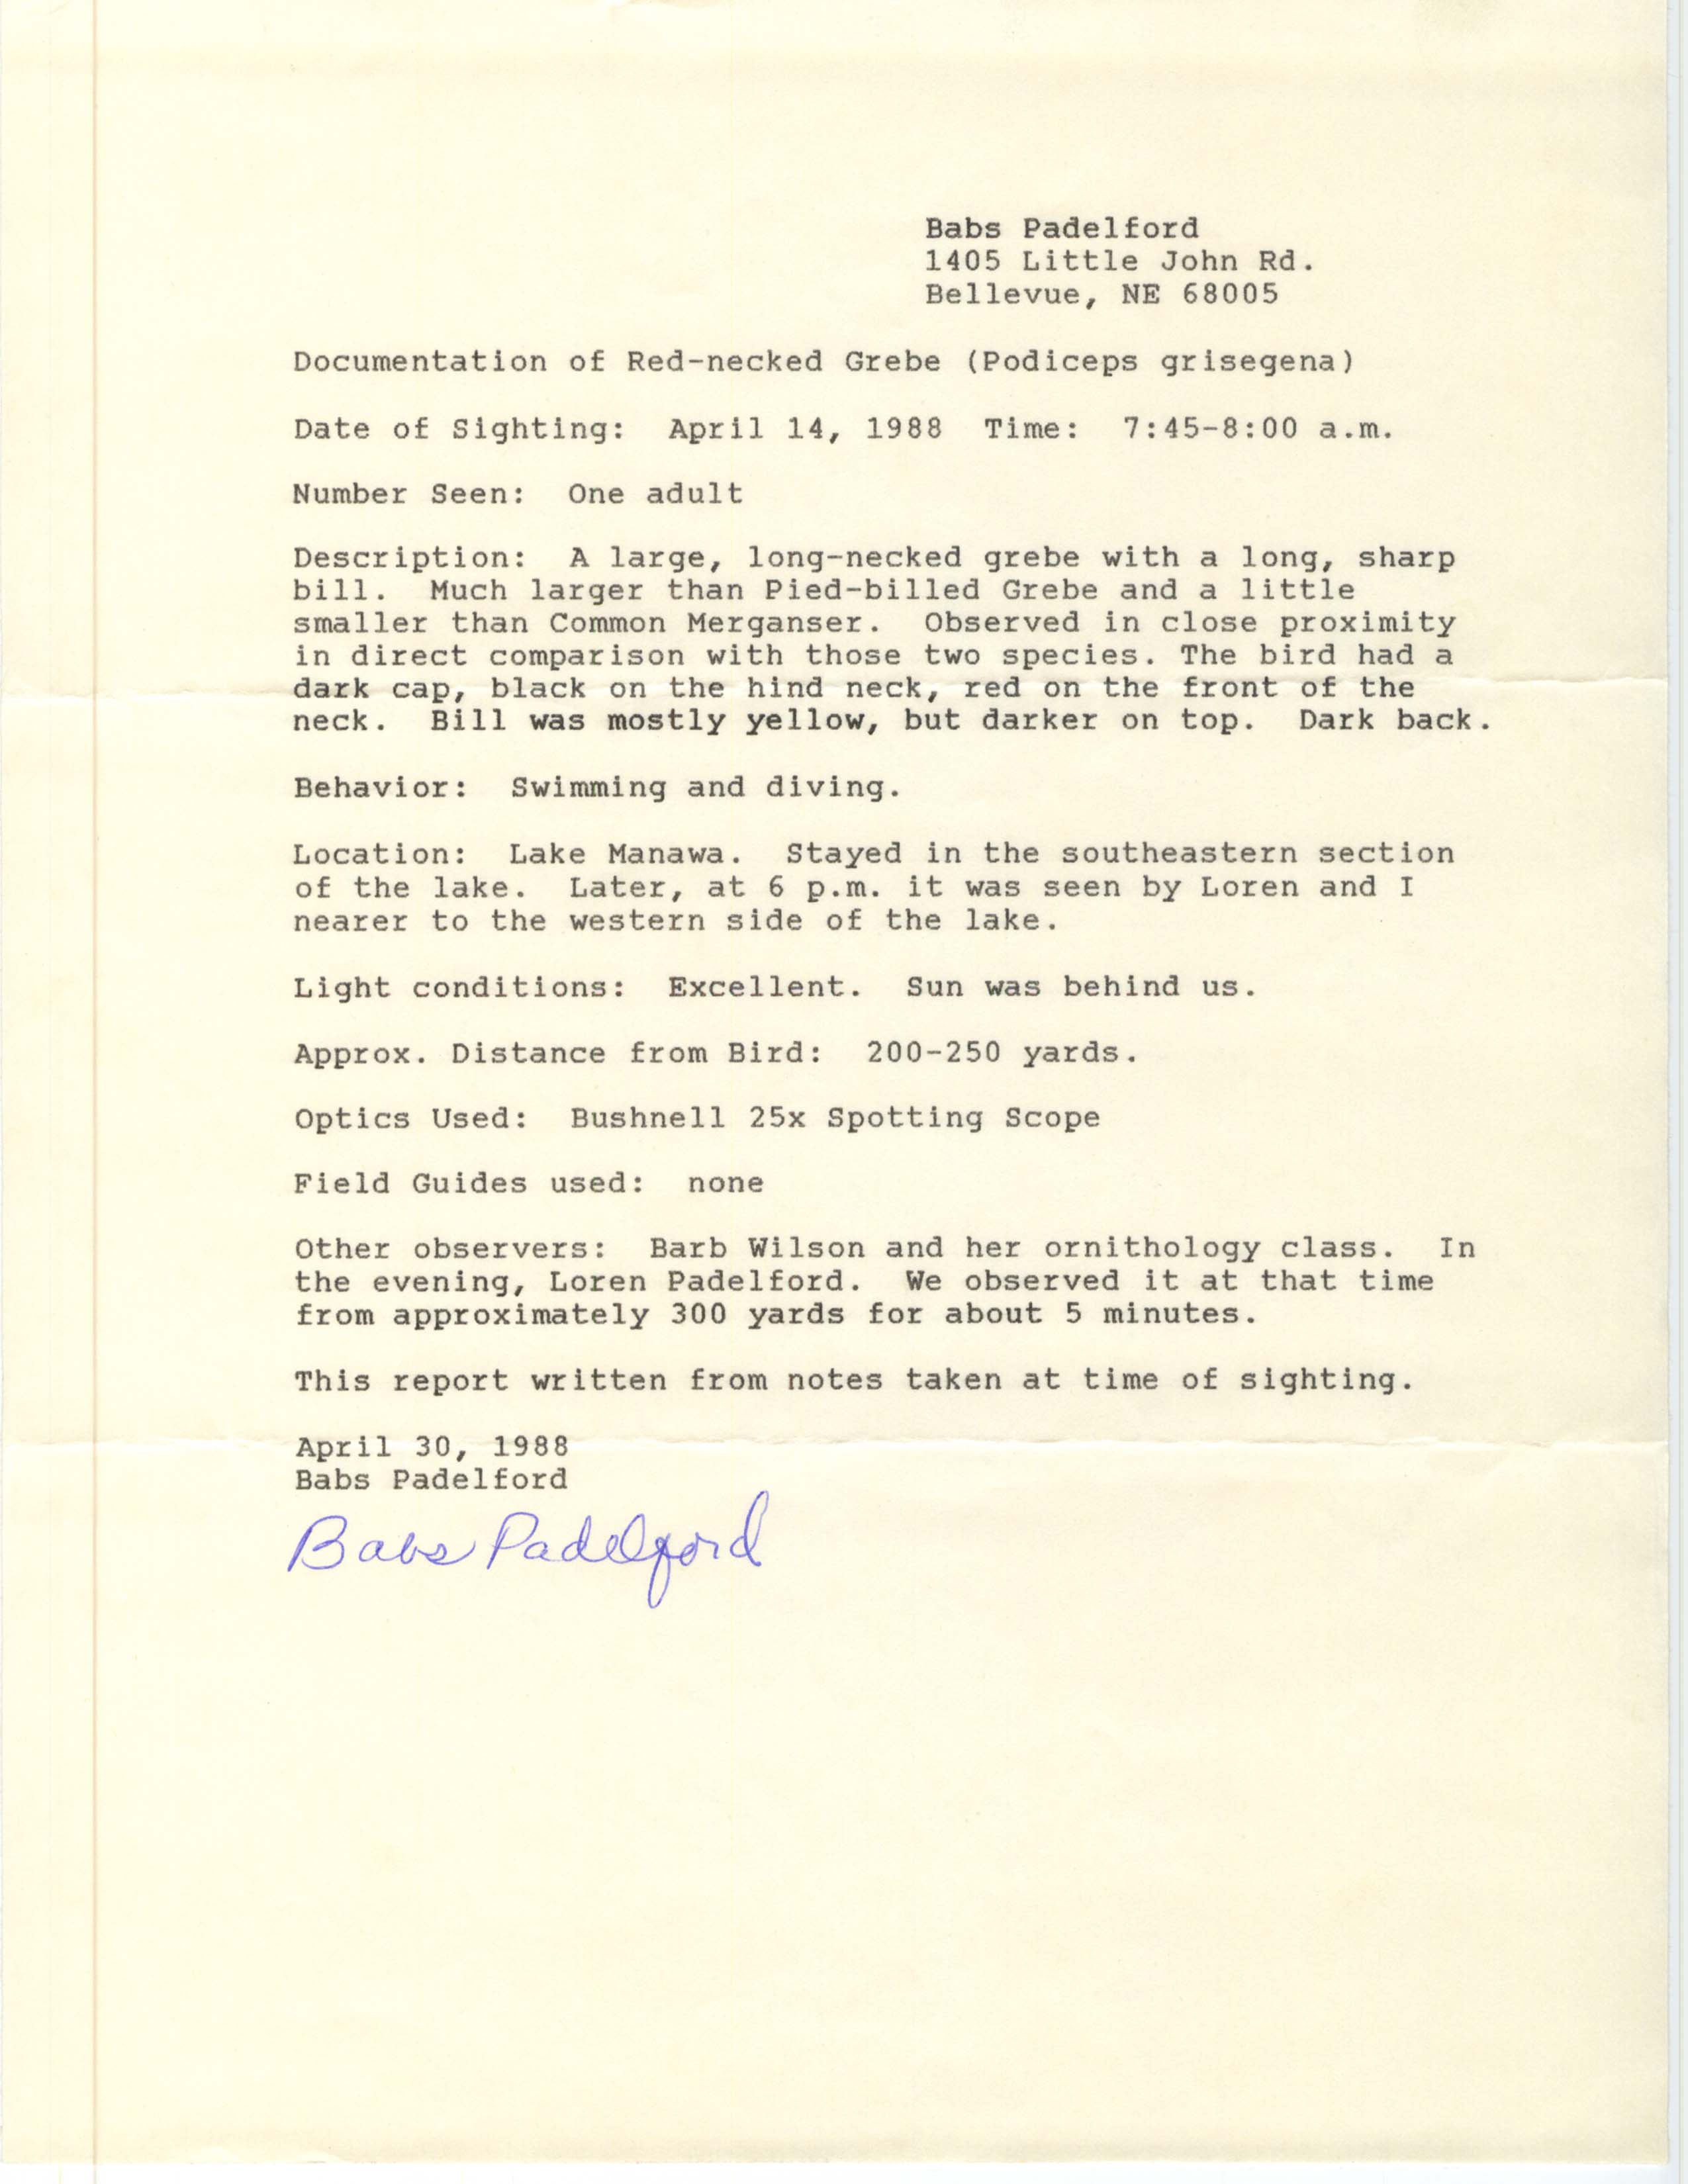 Documentation of Red-necked Grebe (Podiceps grisegena), April 30, 1988